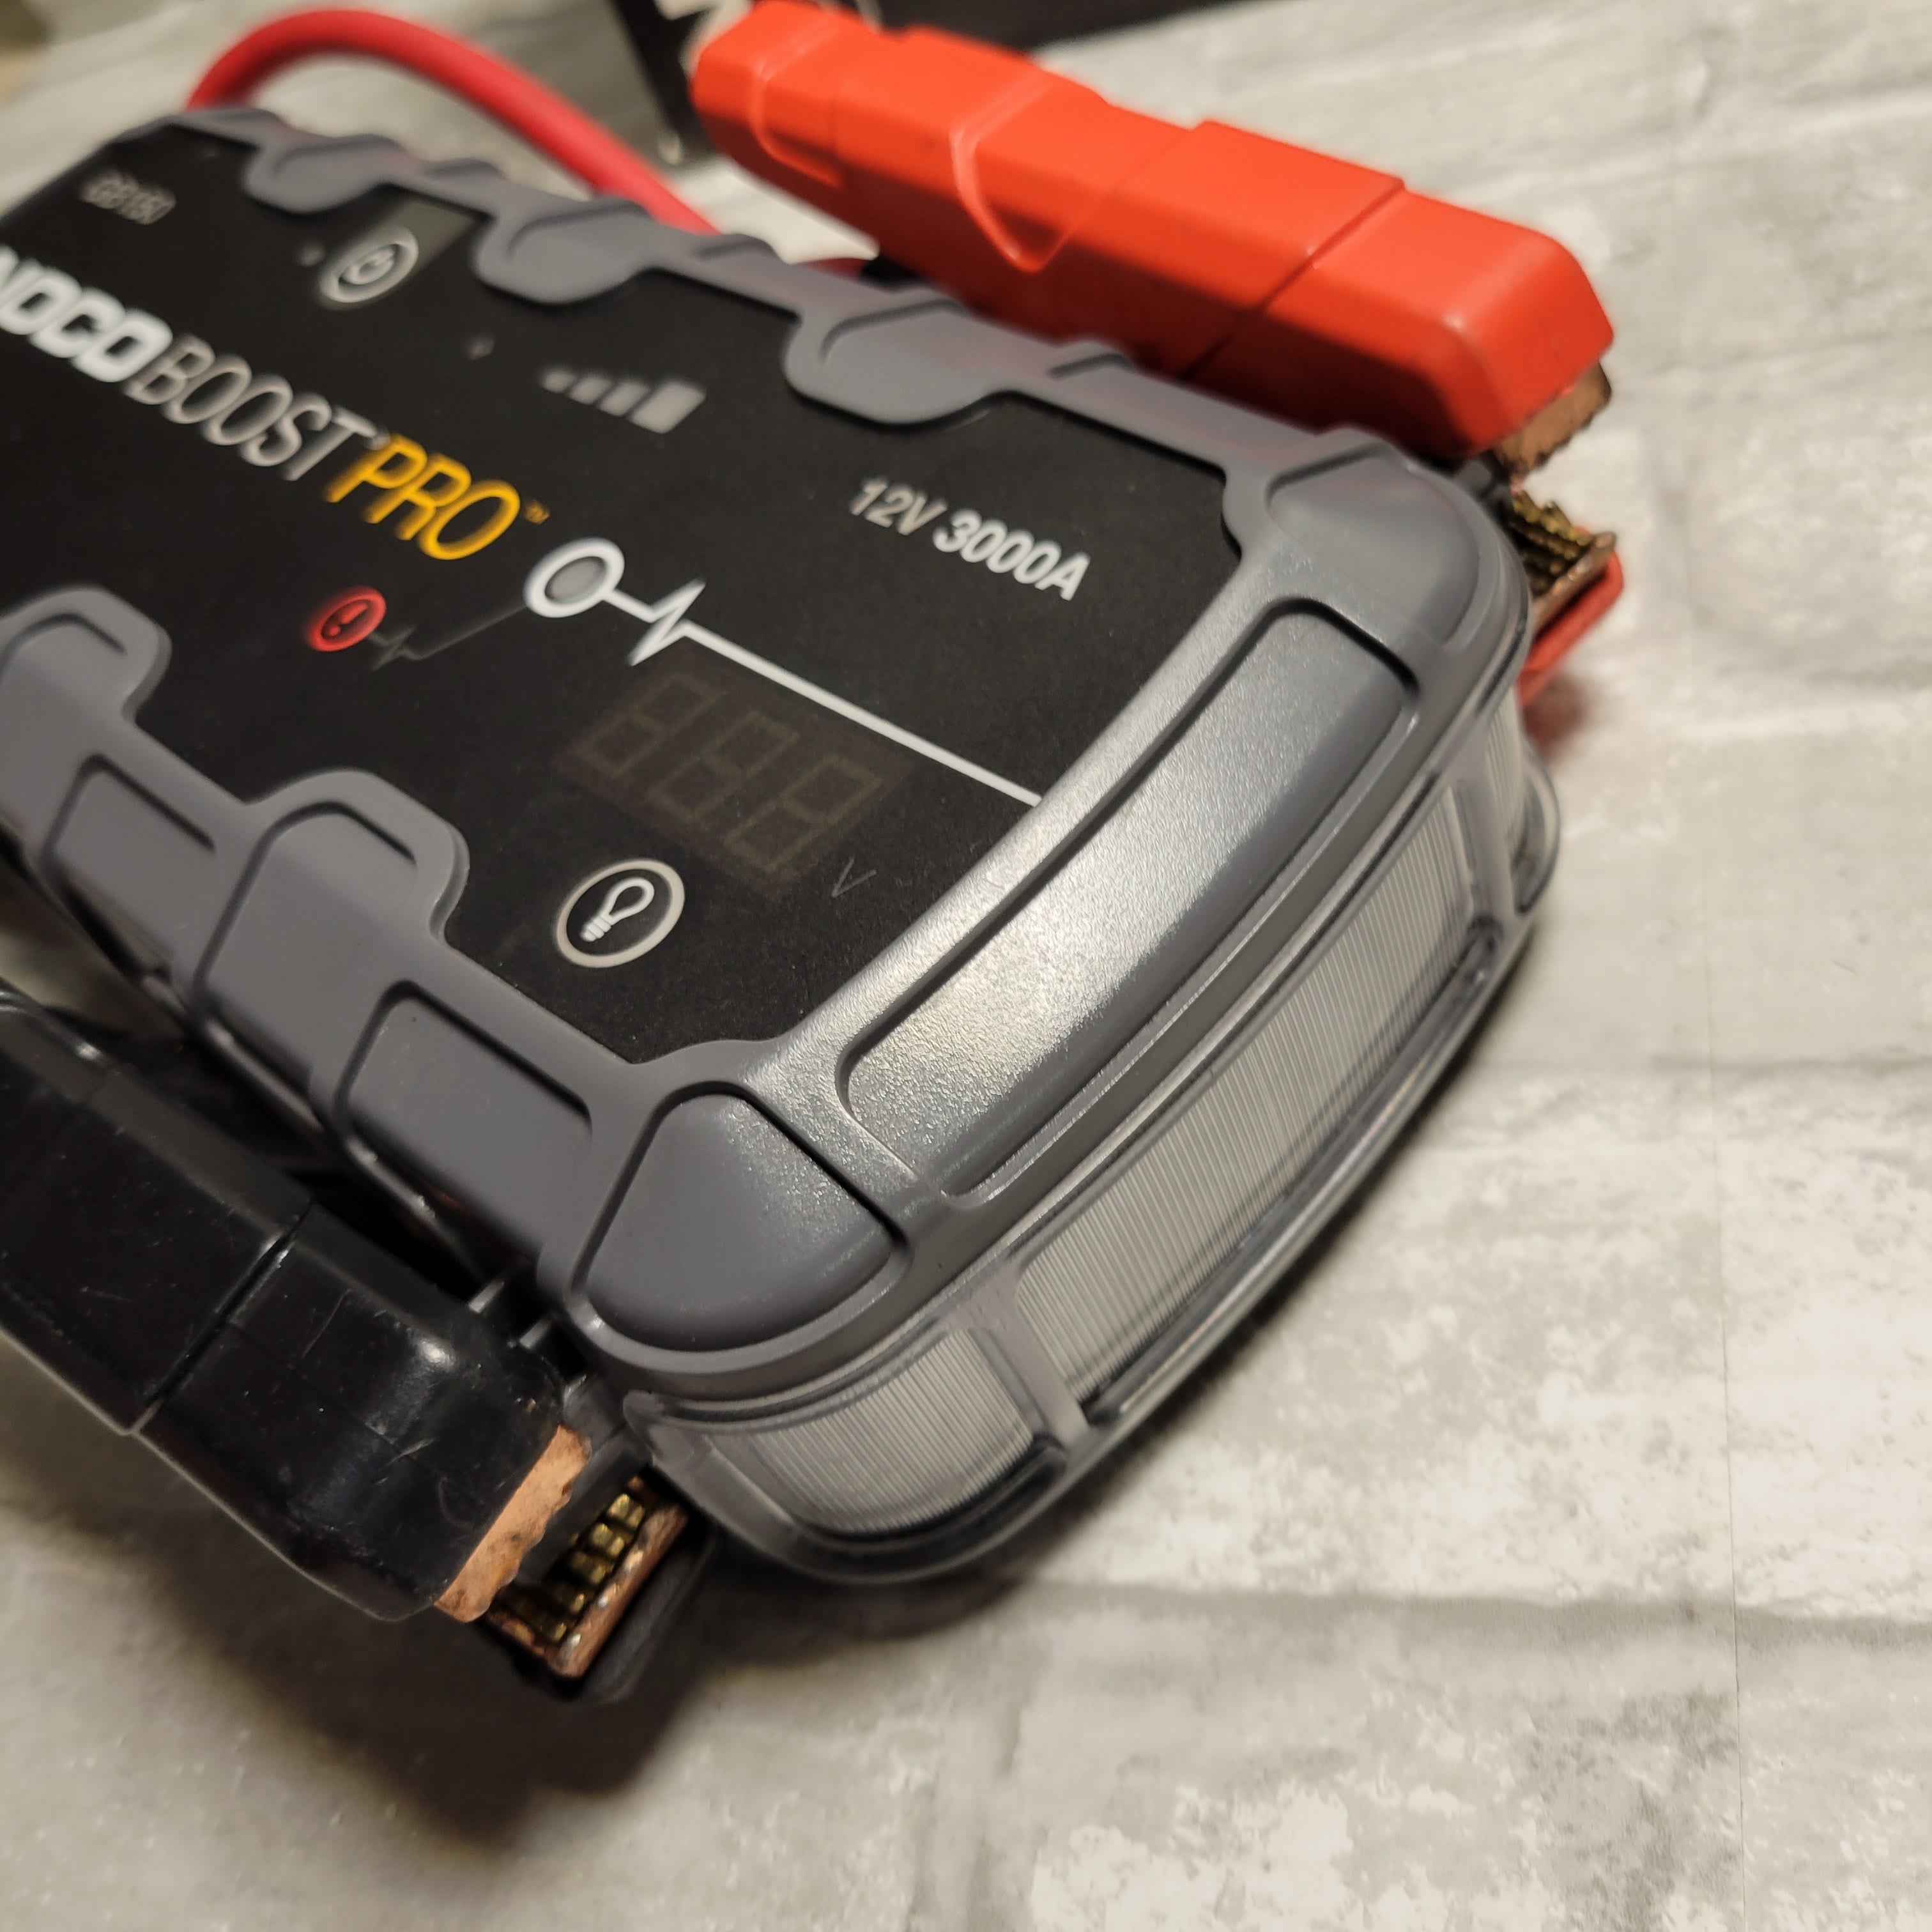 NOCO Boost Pro GB150 UltraSafe 3000 Amp 12V Lithium Battery Jump Starter *PARTS* (8051238338798)